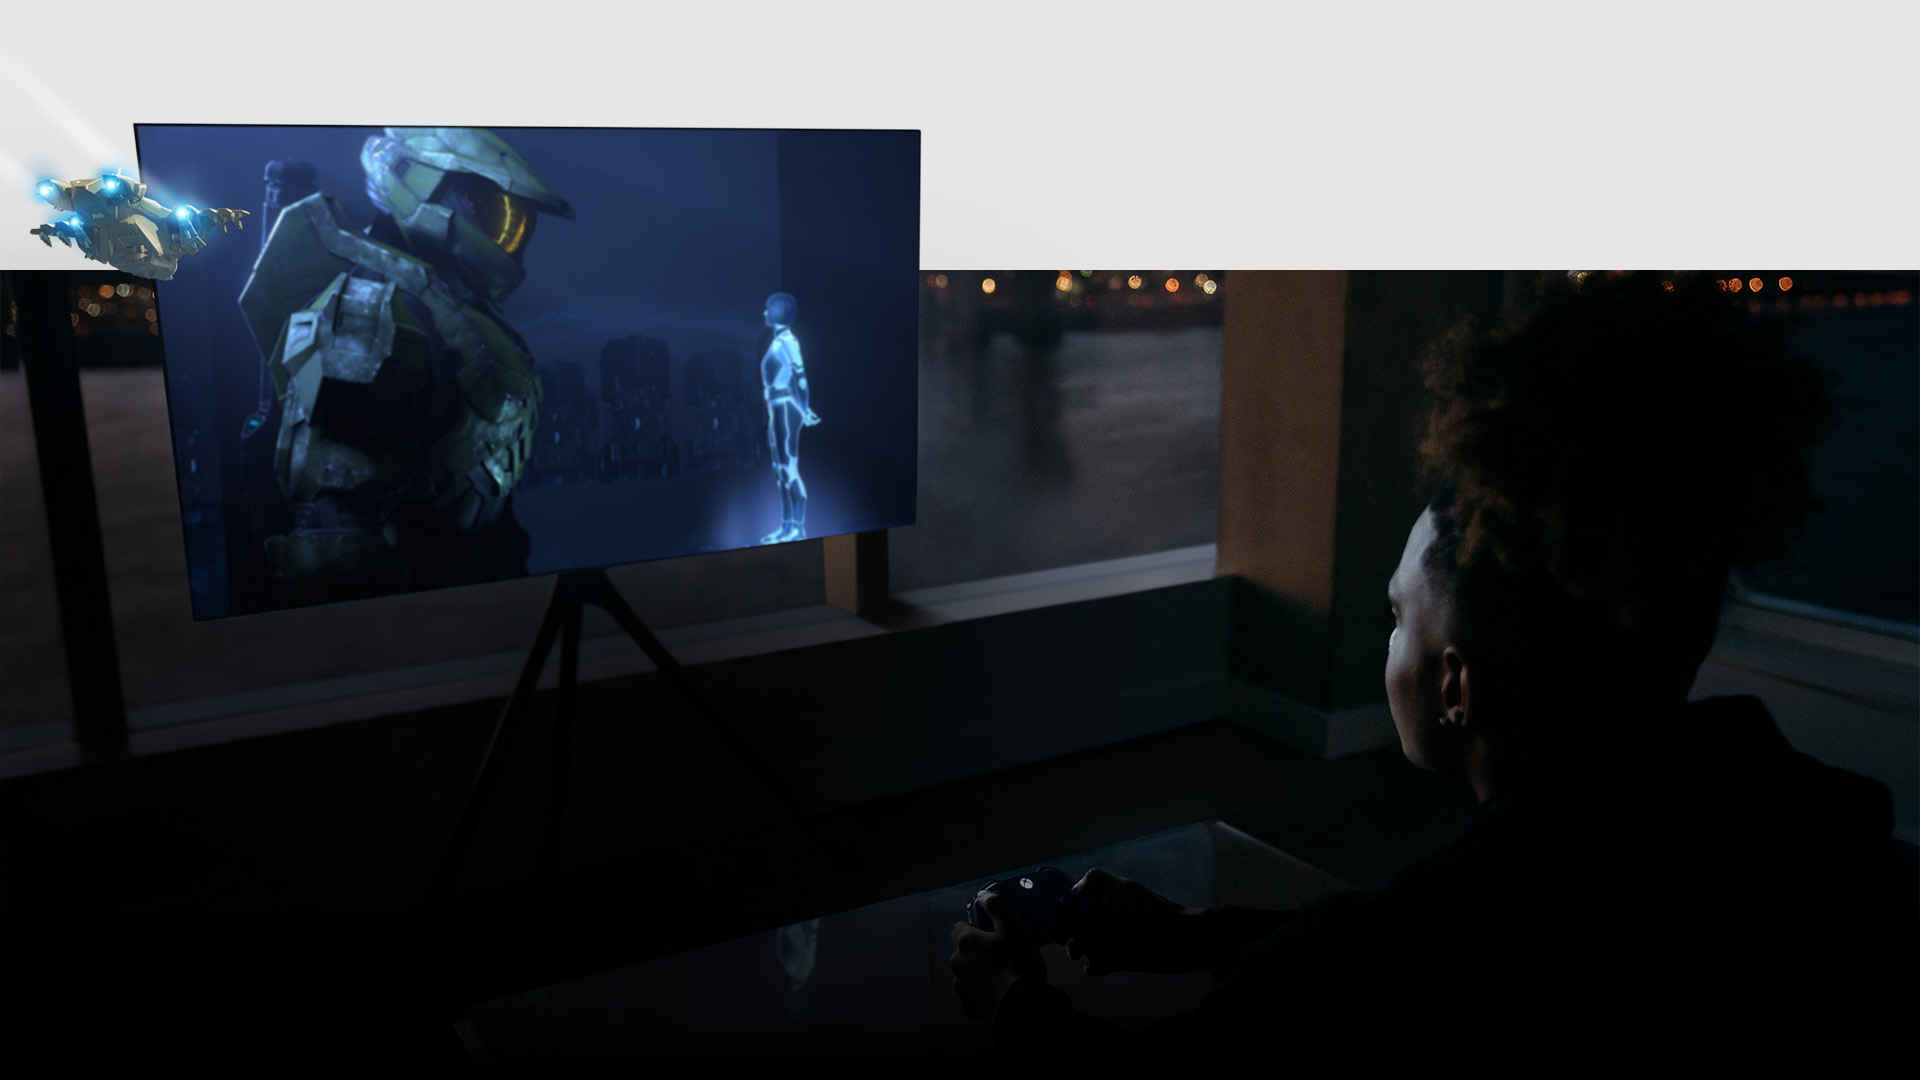 Hráč v obývacím pokoji drží ovladač a na televizoru Samsung běží hra Halo Infinite